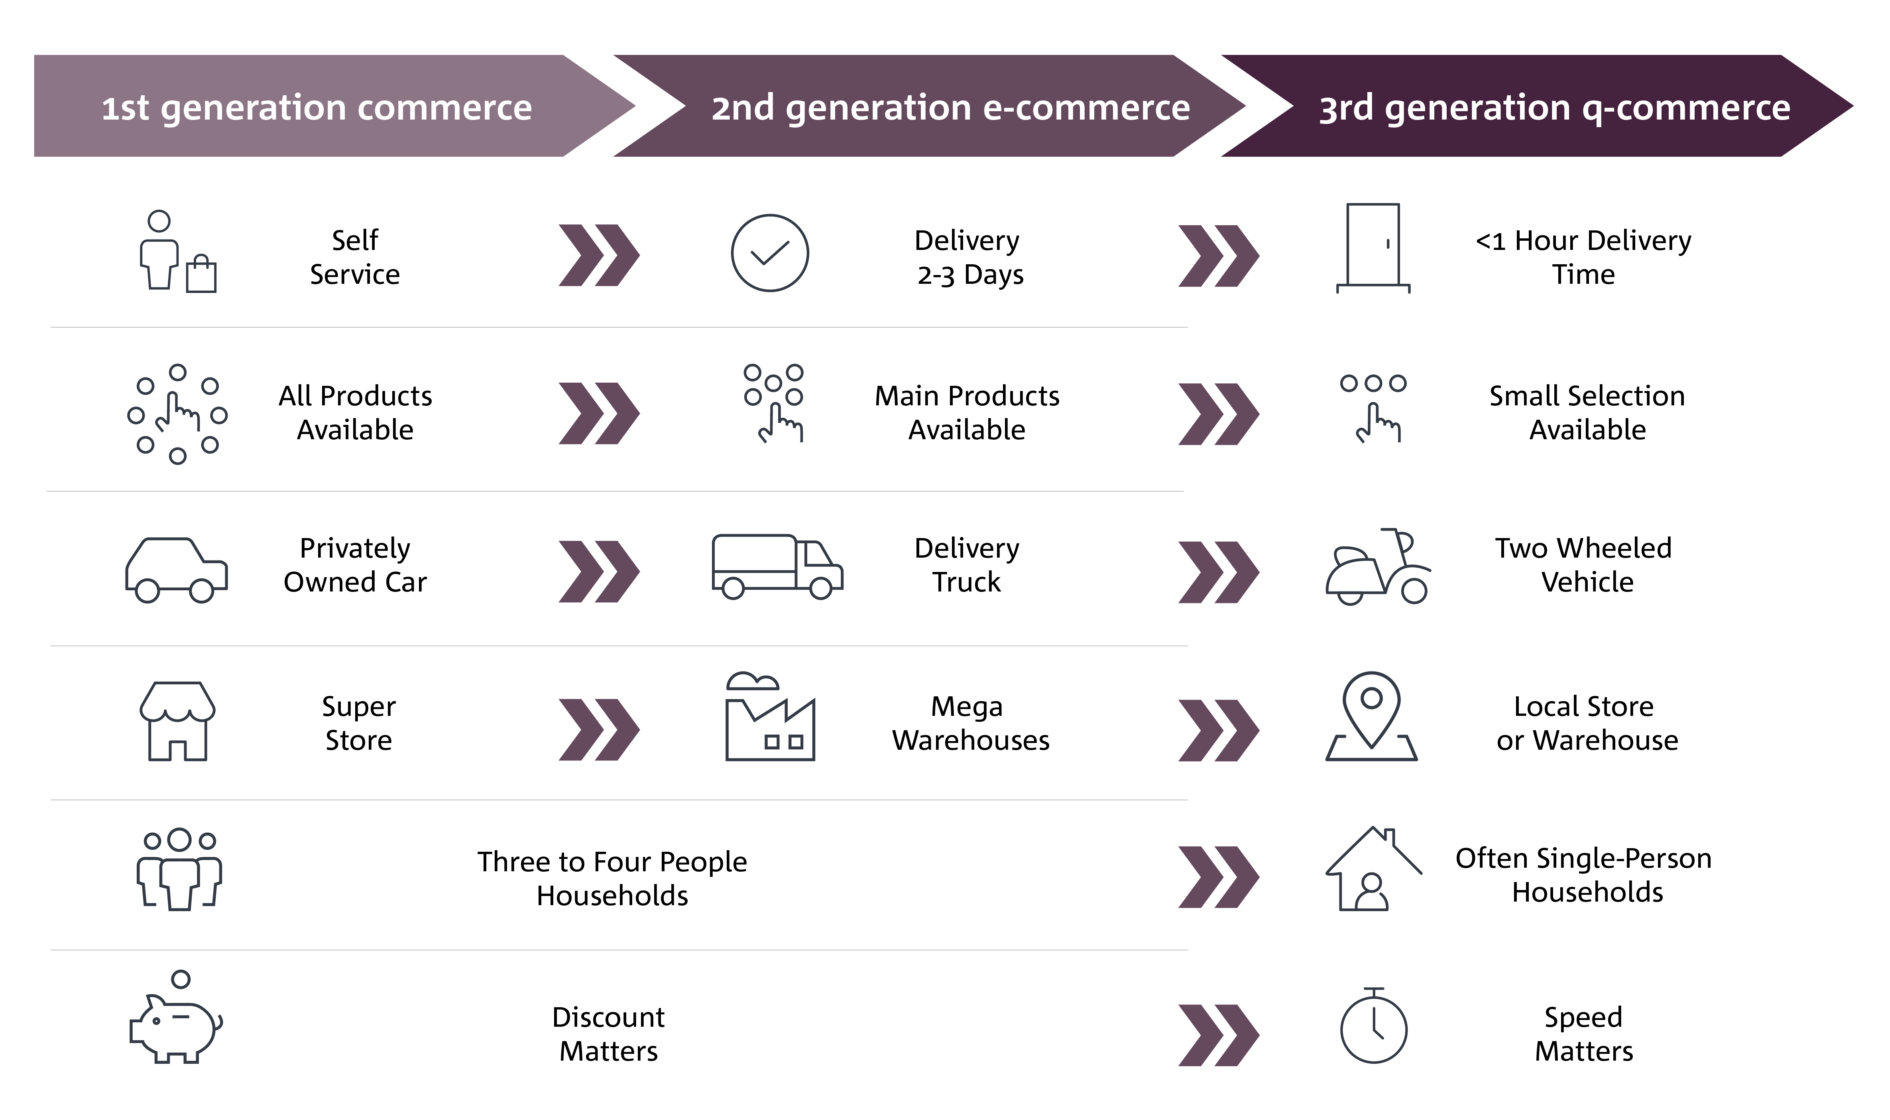 Evolution of Q-commerce 